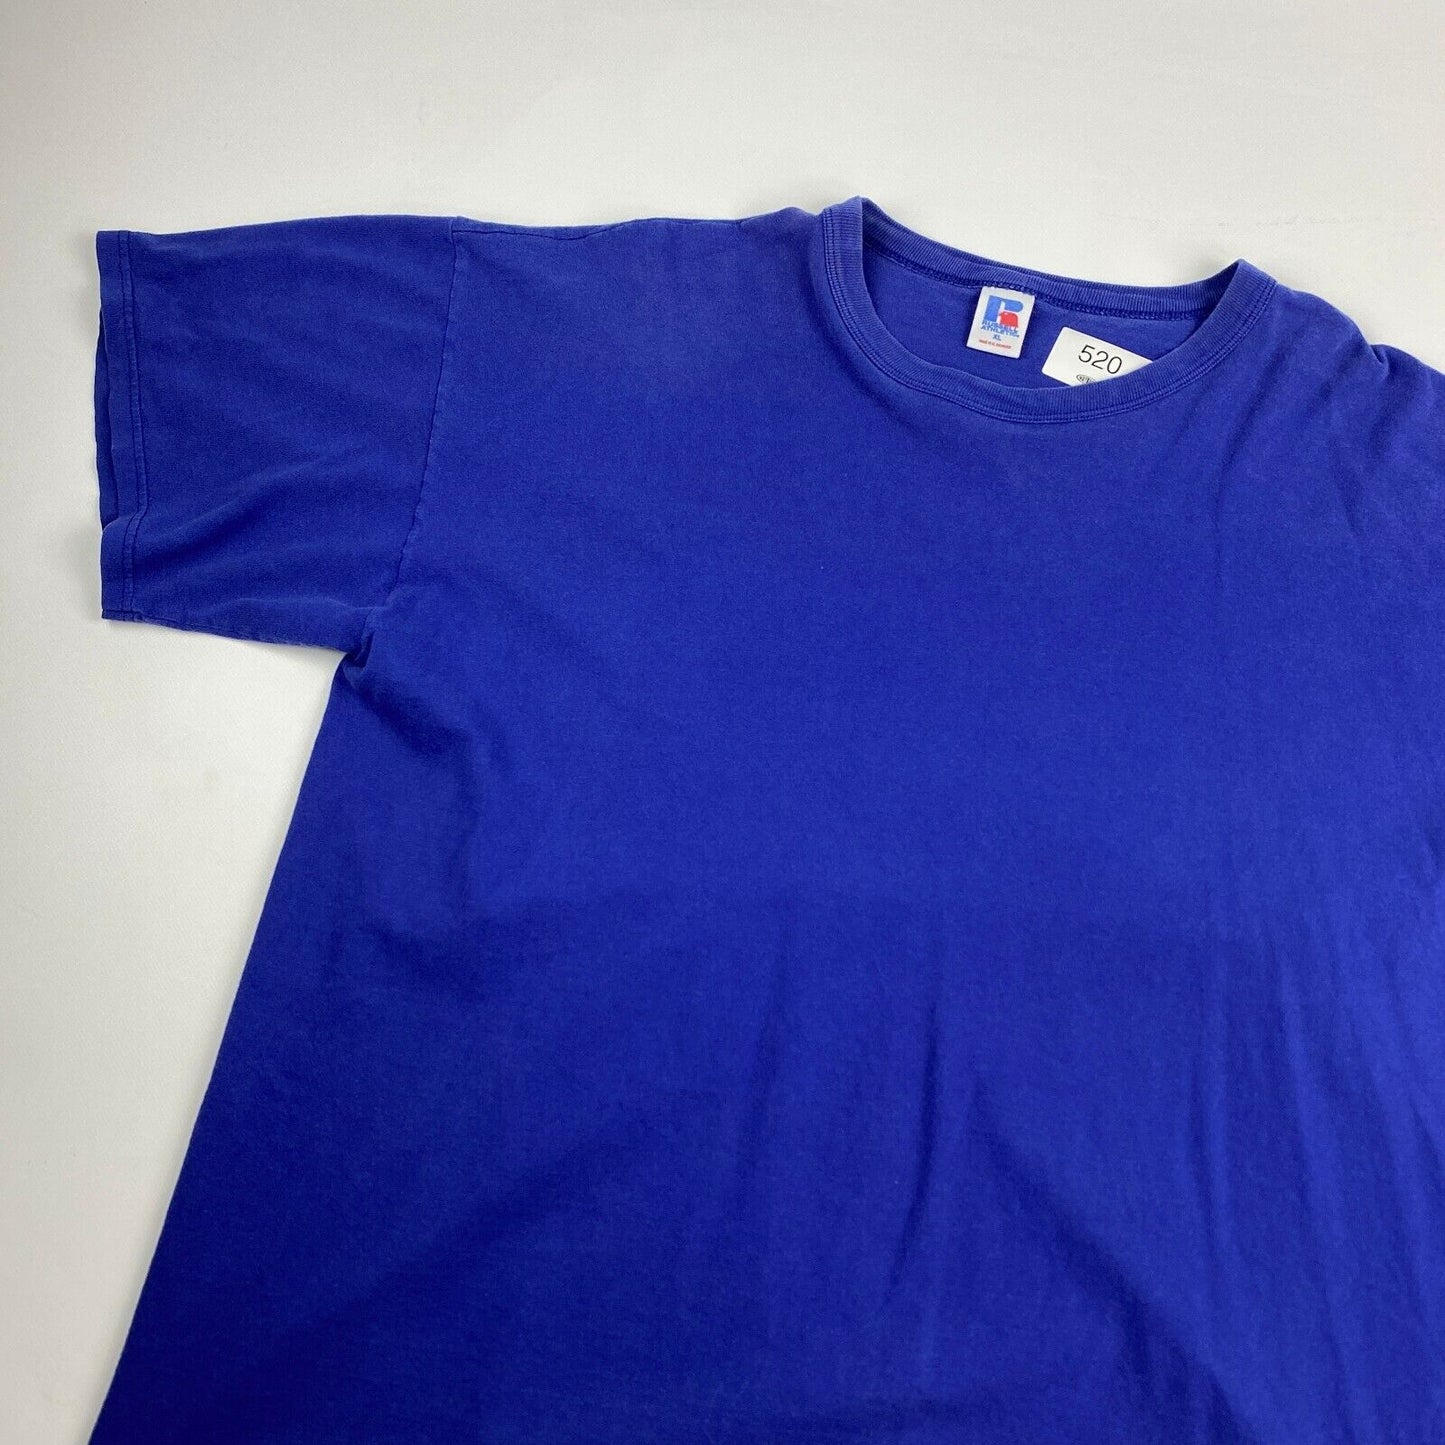 VINTAGE 90s Russell Athletic Blank Blue T-Shirt sz XL Men